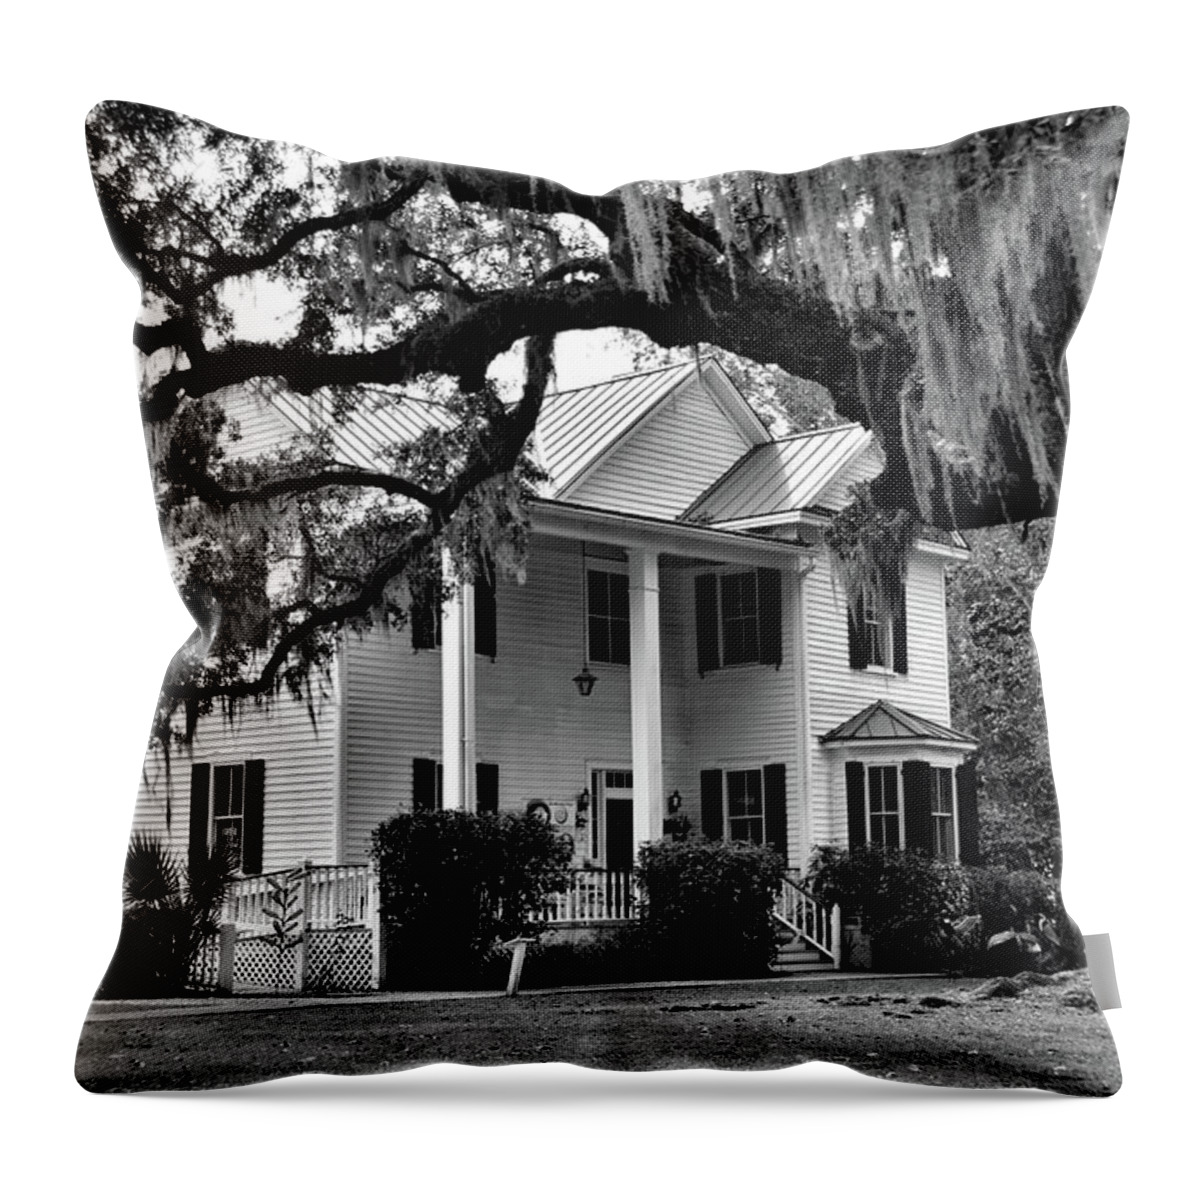 Frampton House Throw Pillow featuring the photograph Frampton House by Ben Prepelka